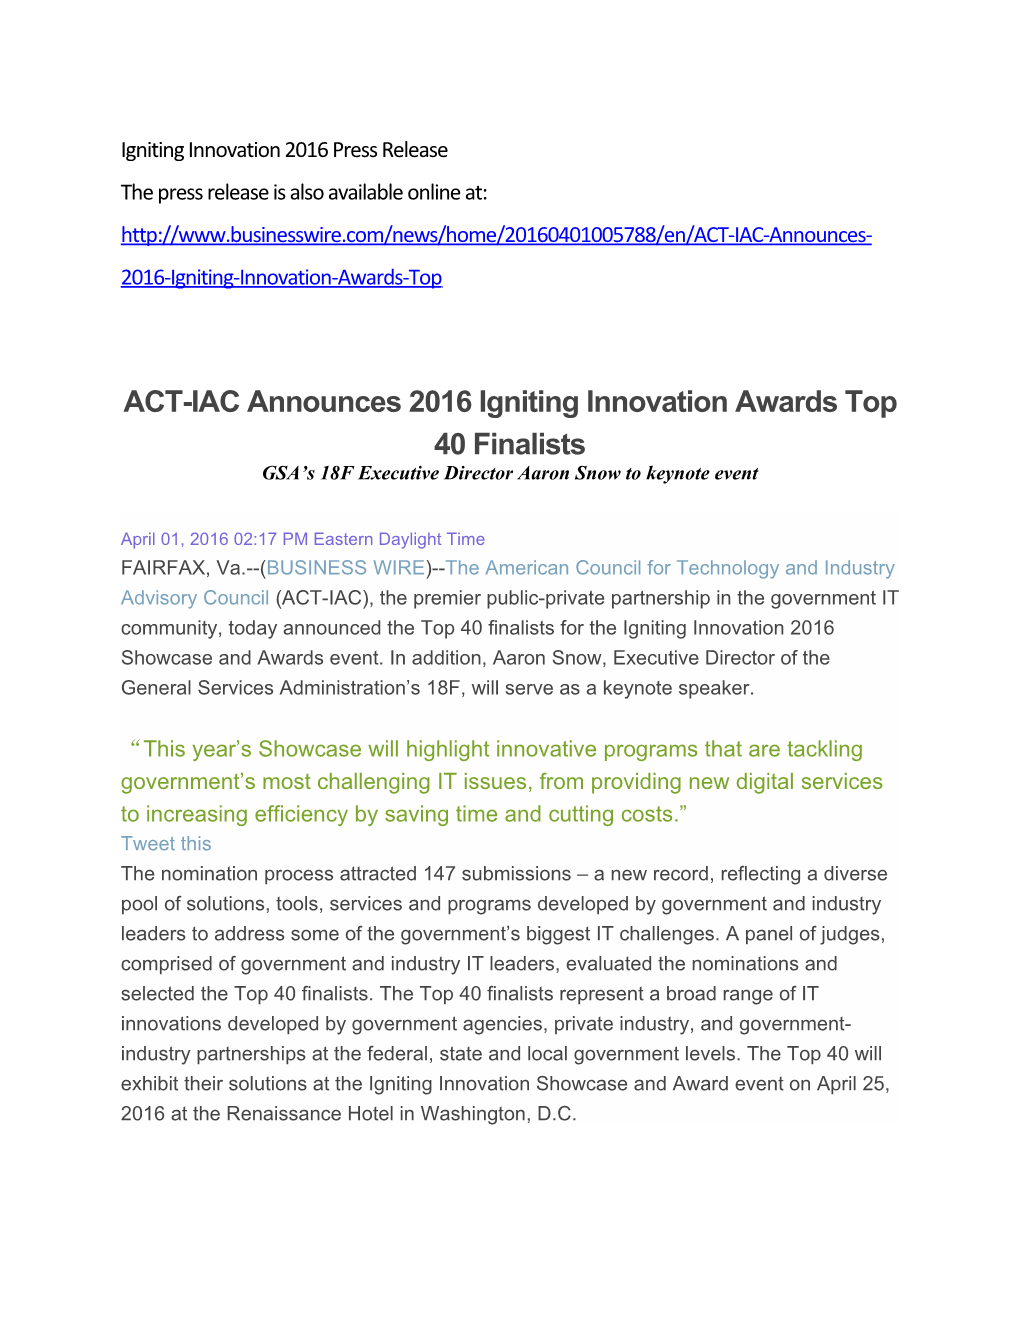 ACT-IAC Announces 2016 Igniting Innovation Awards Top 40 Finalists